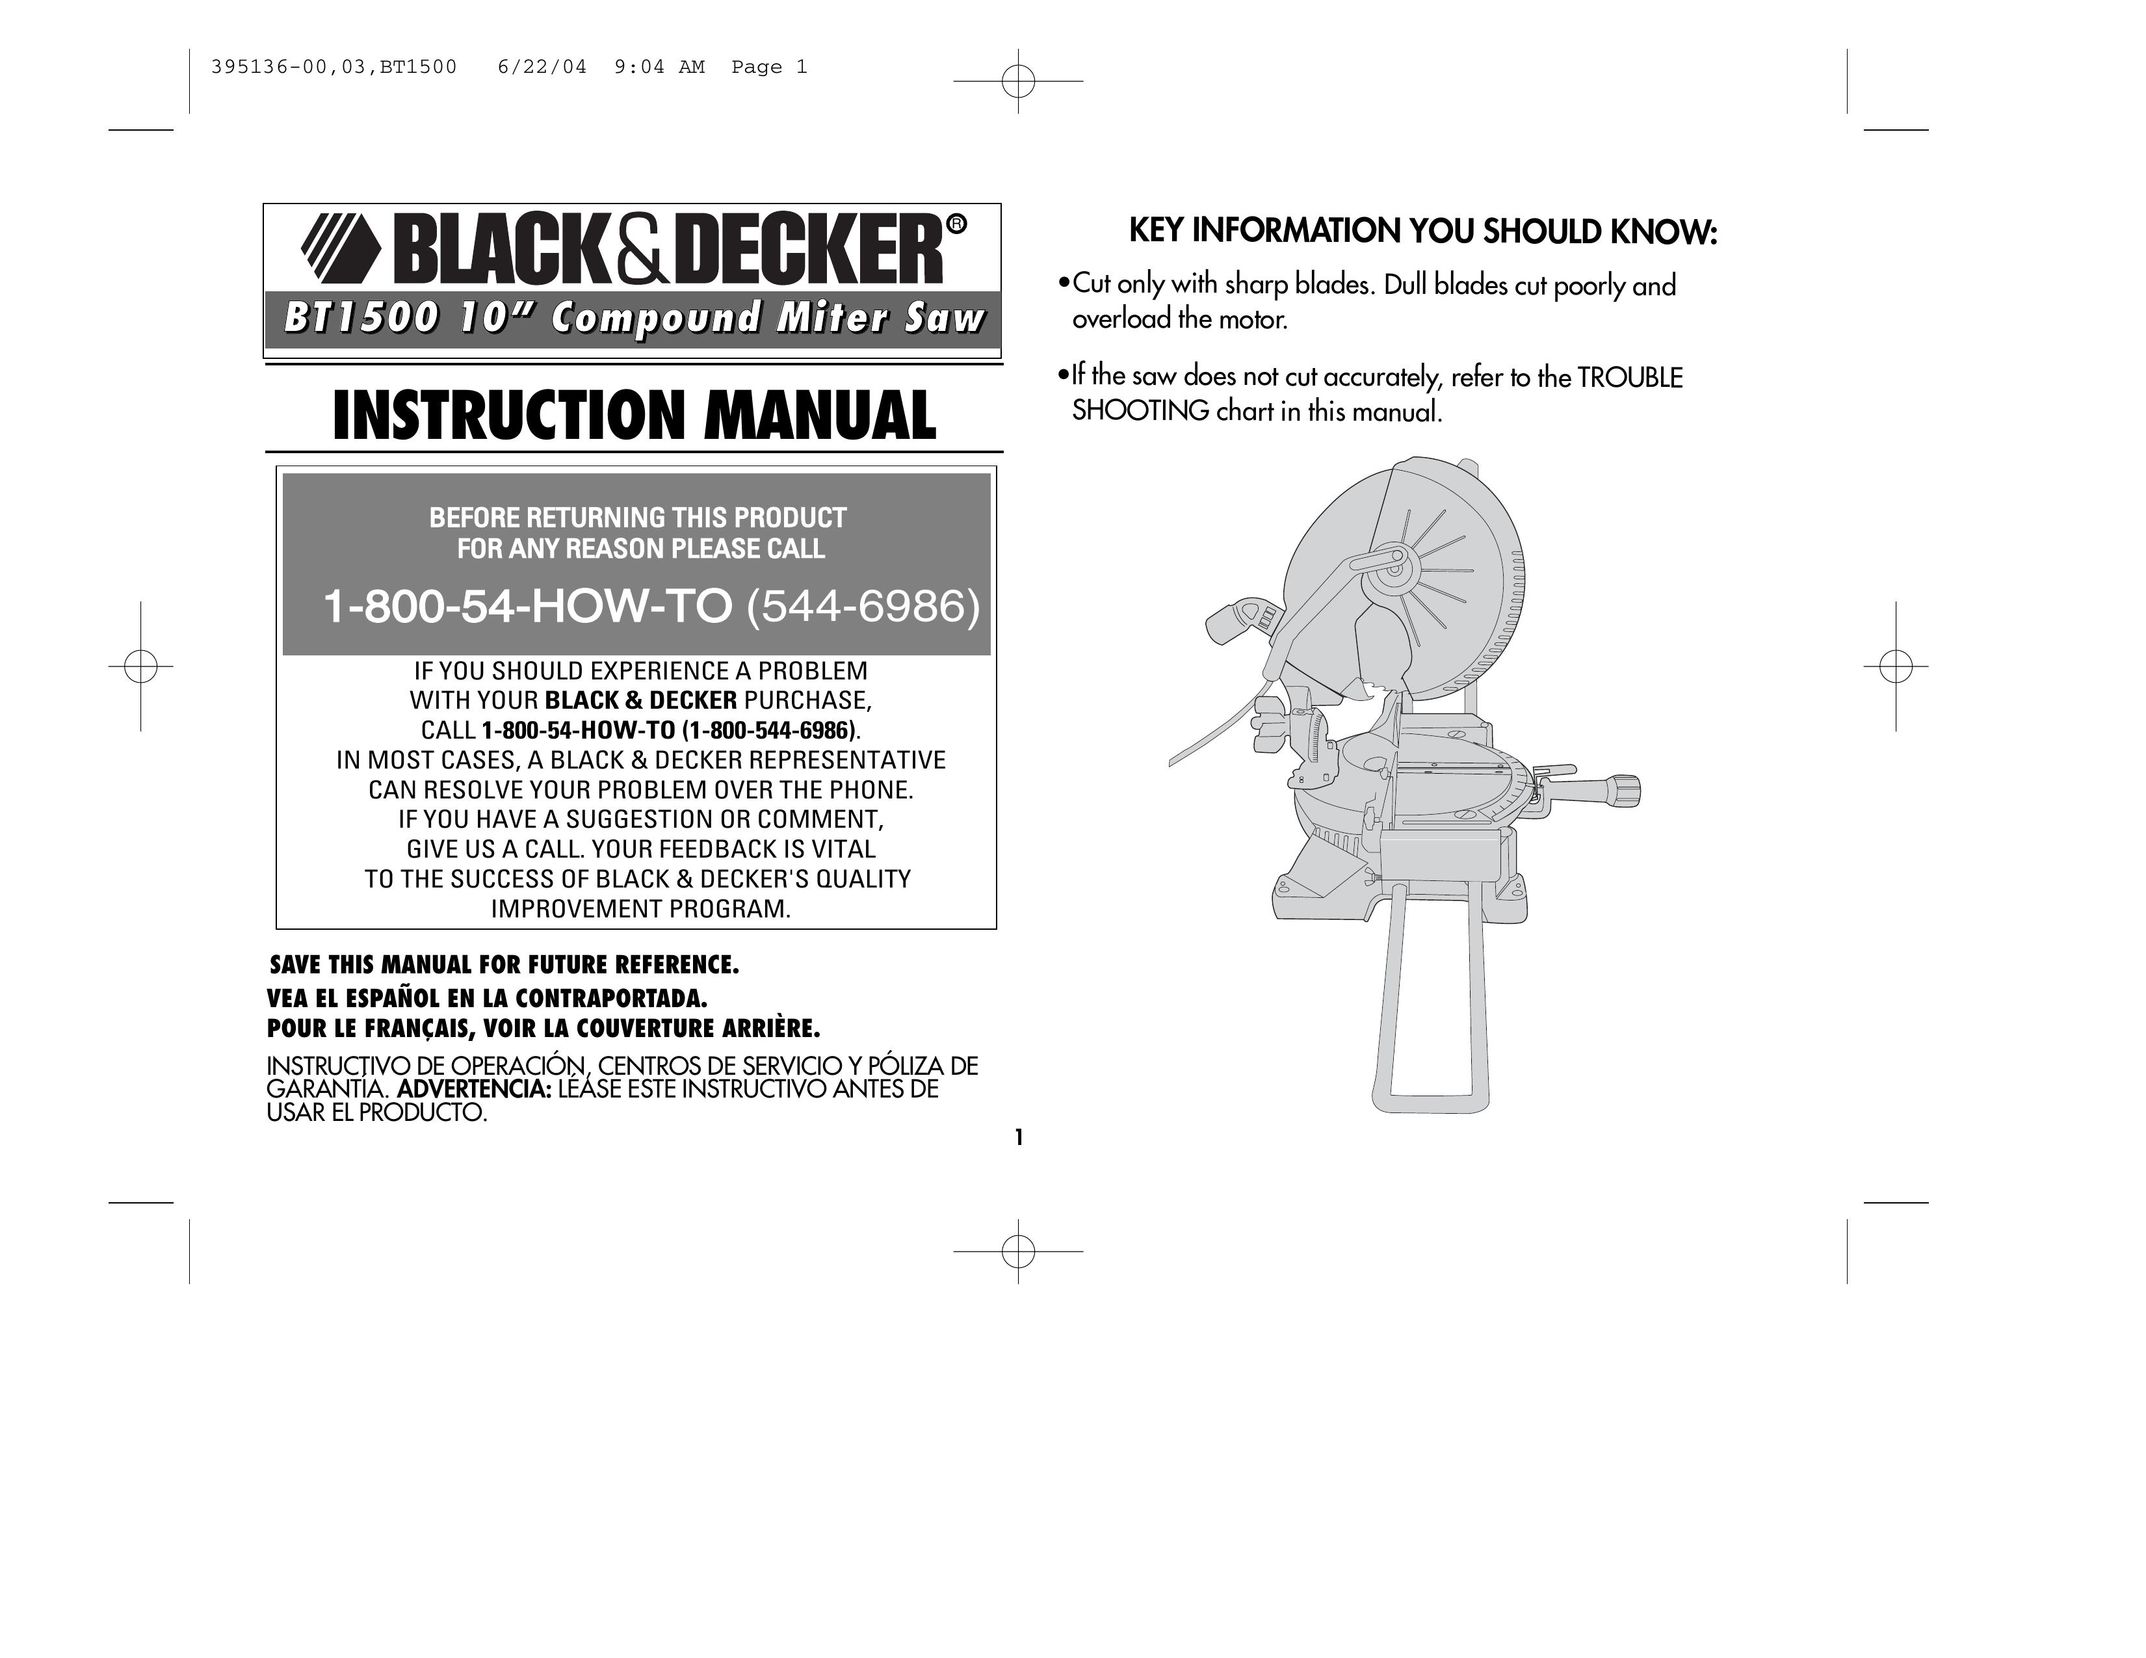 Black & Decker 395136-00 Saw User Manual